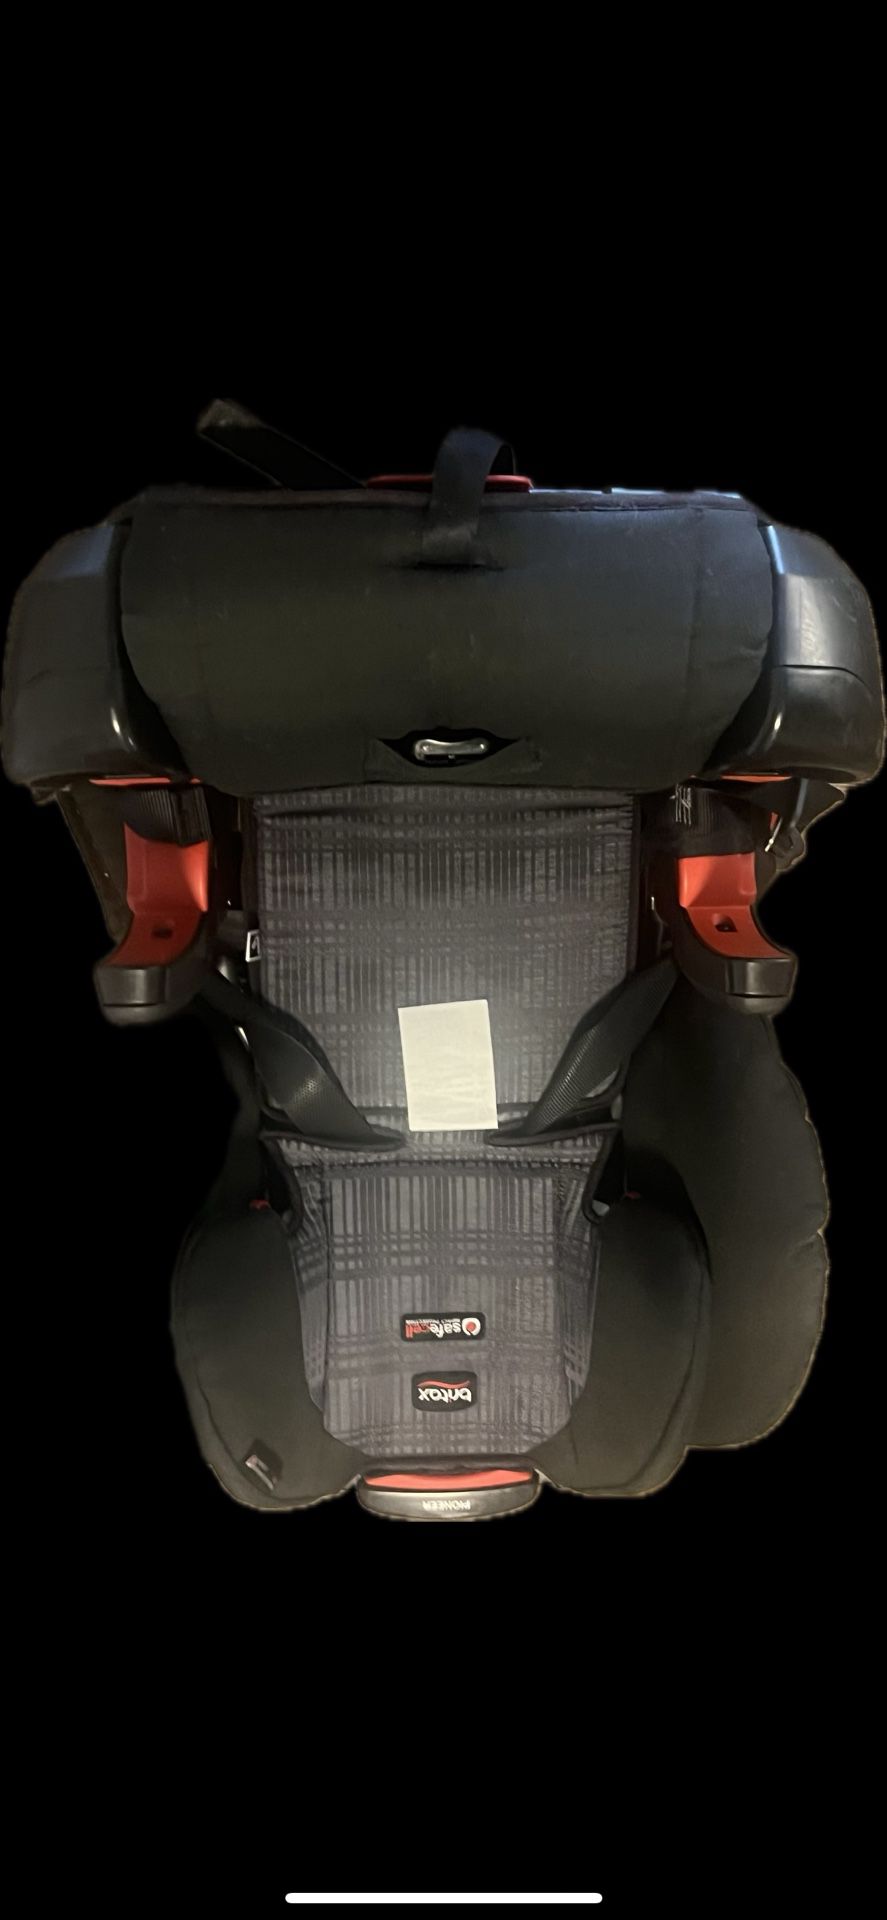 Britax car seat